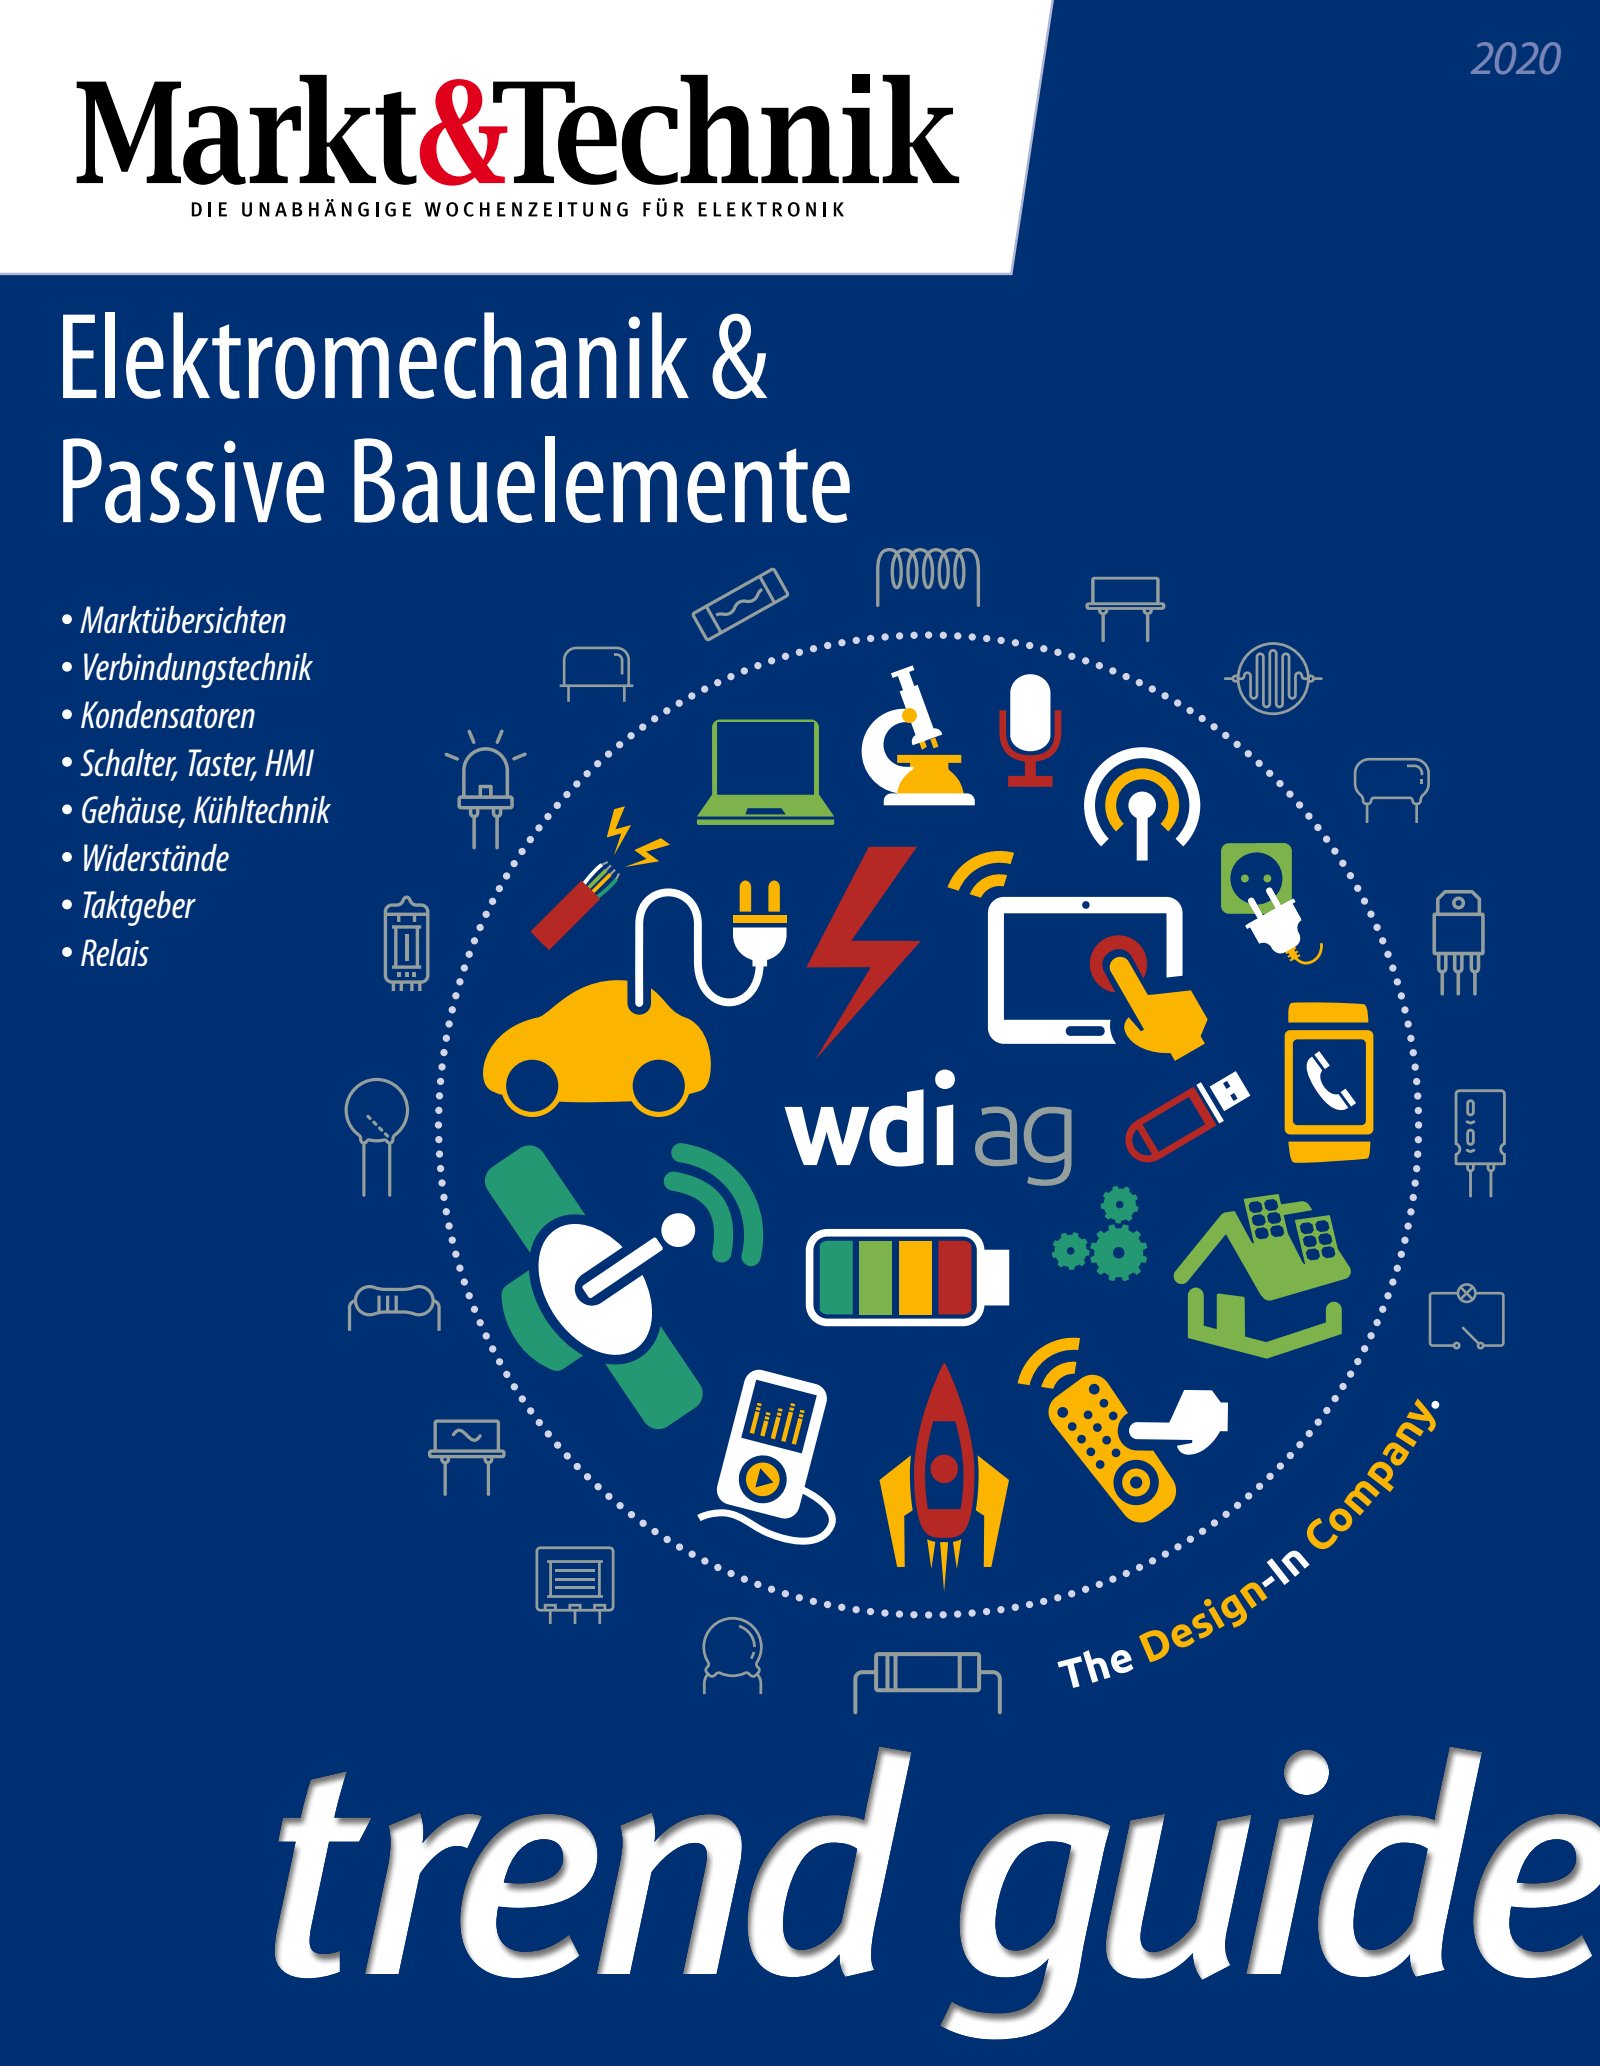 Markt&Technik Trend-Guide Elektromechanik & Passive Bauelemente 2020 Digital